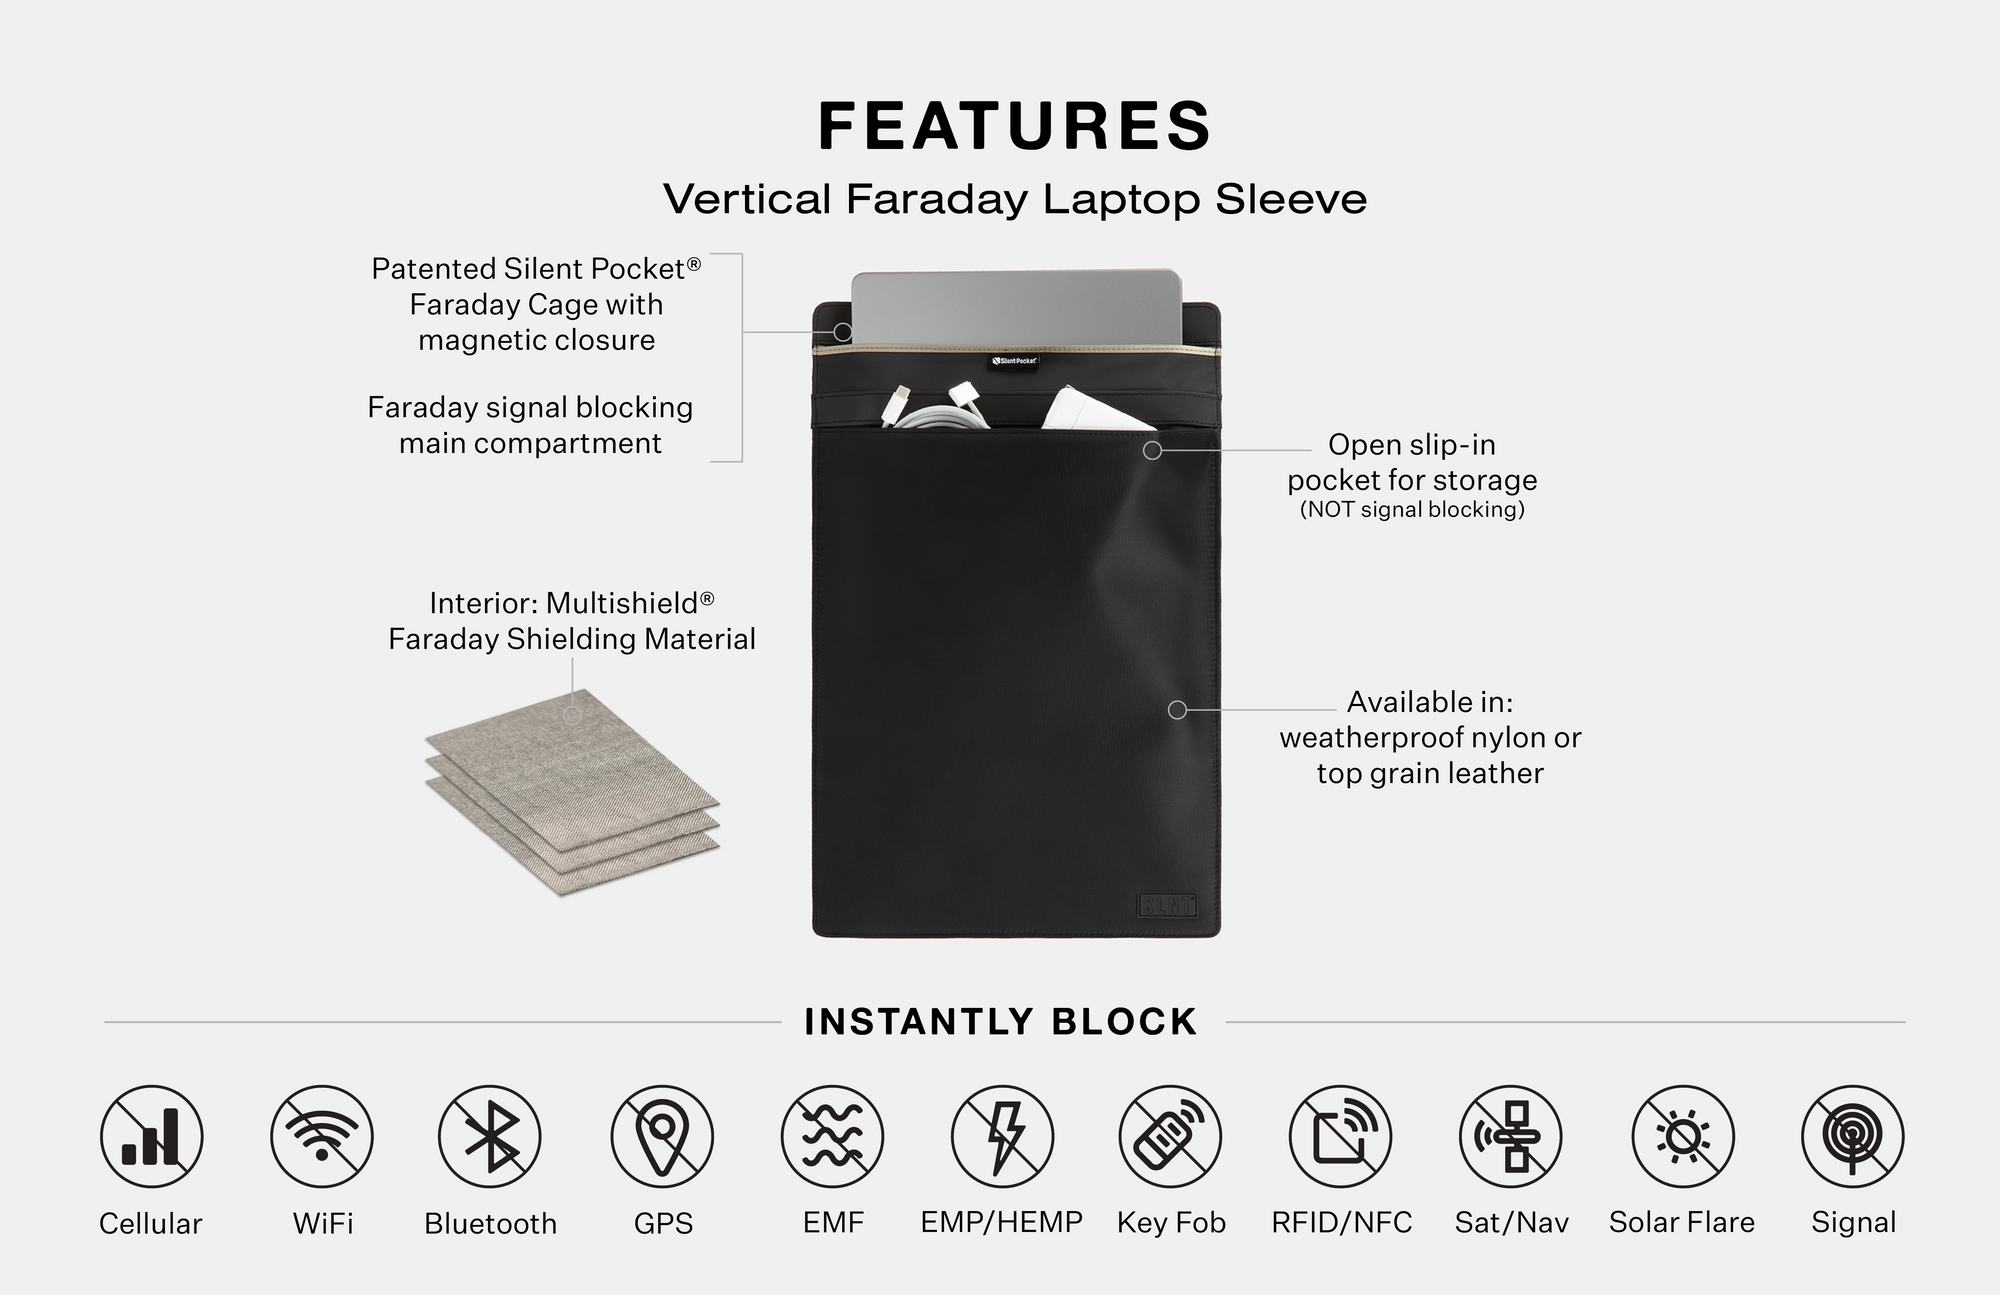 Vertical Faraday Laptop Sleeve